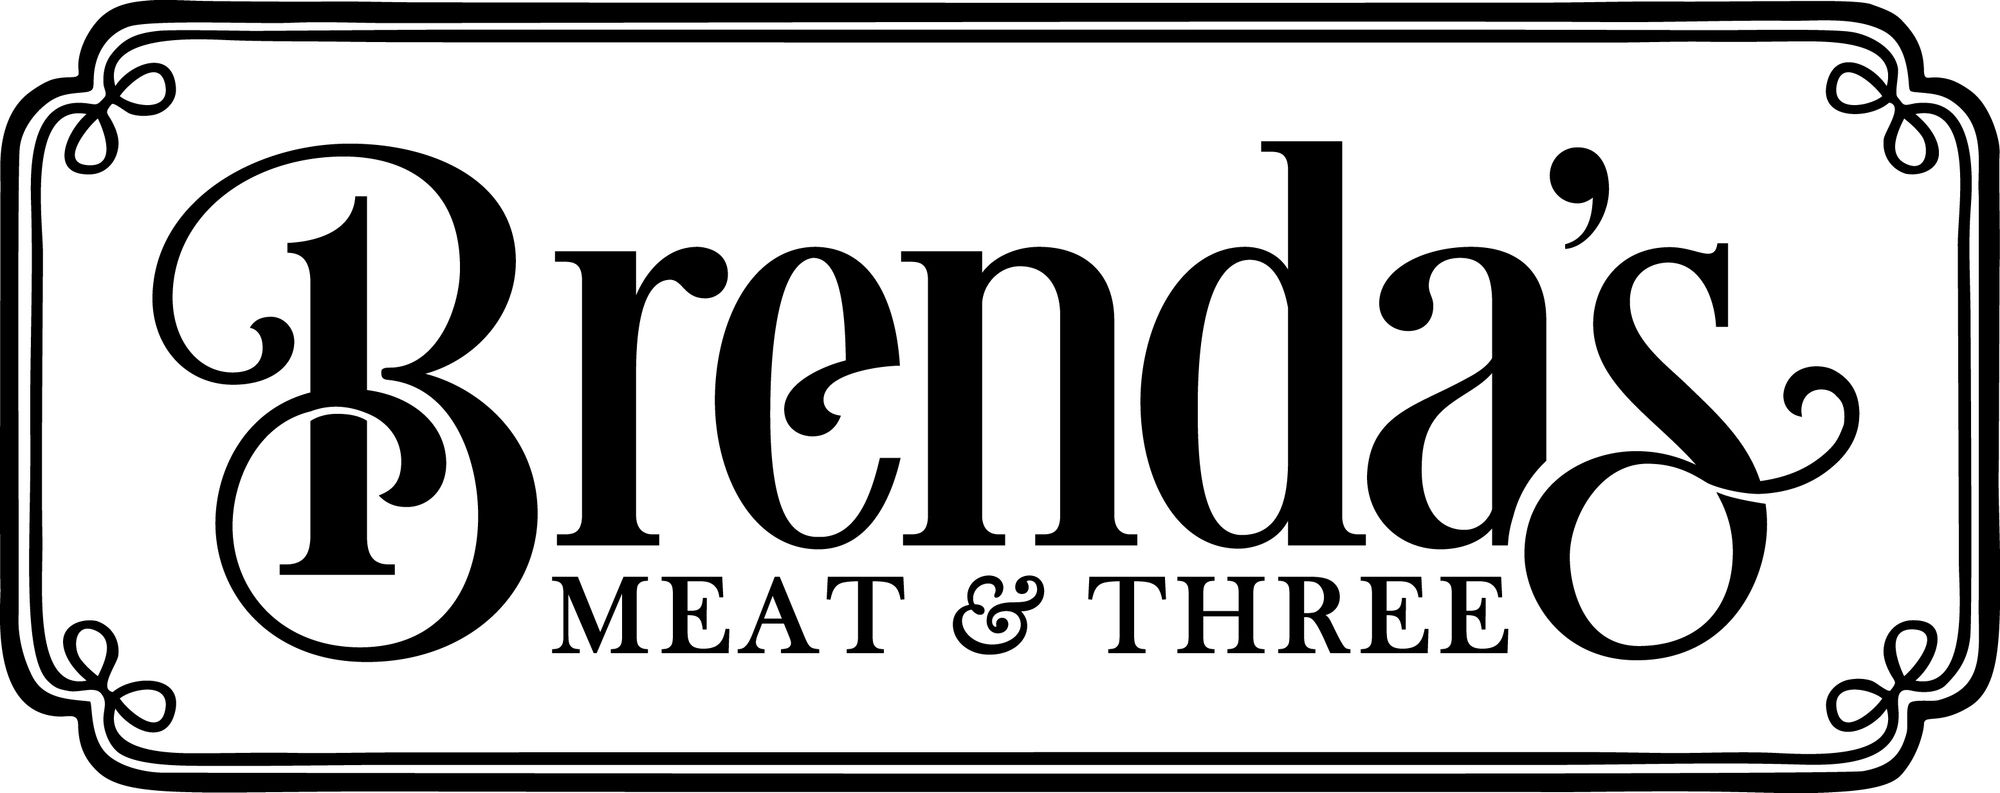 Brendas3_logo.jpg